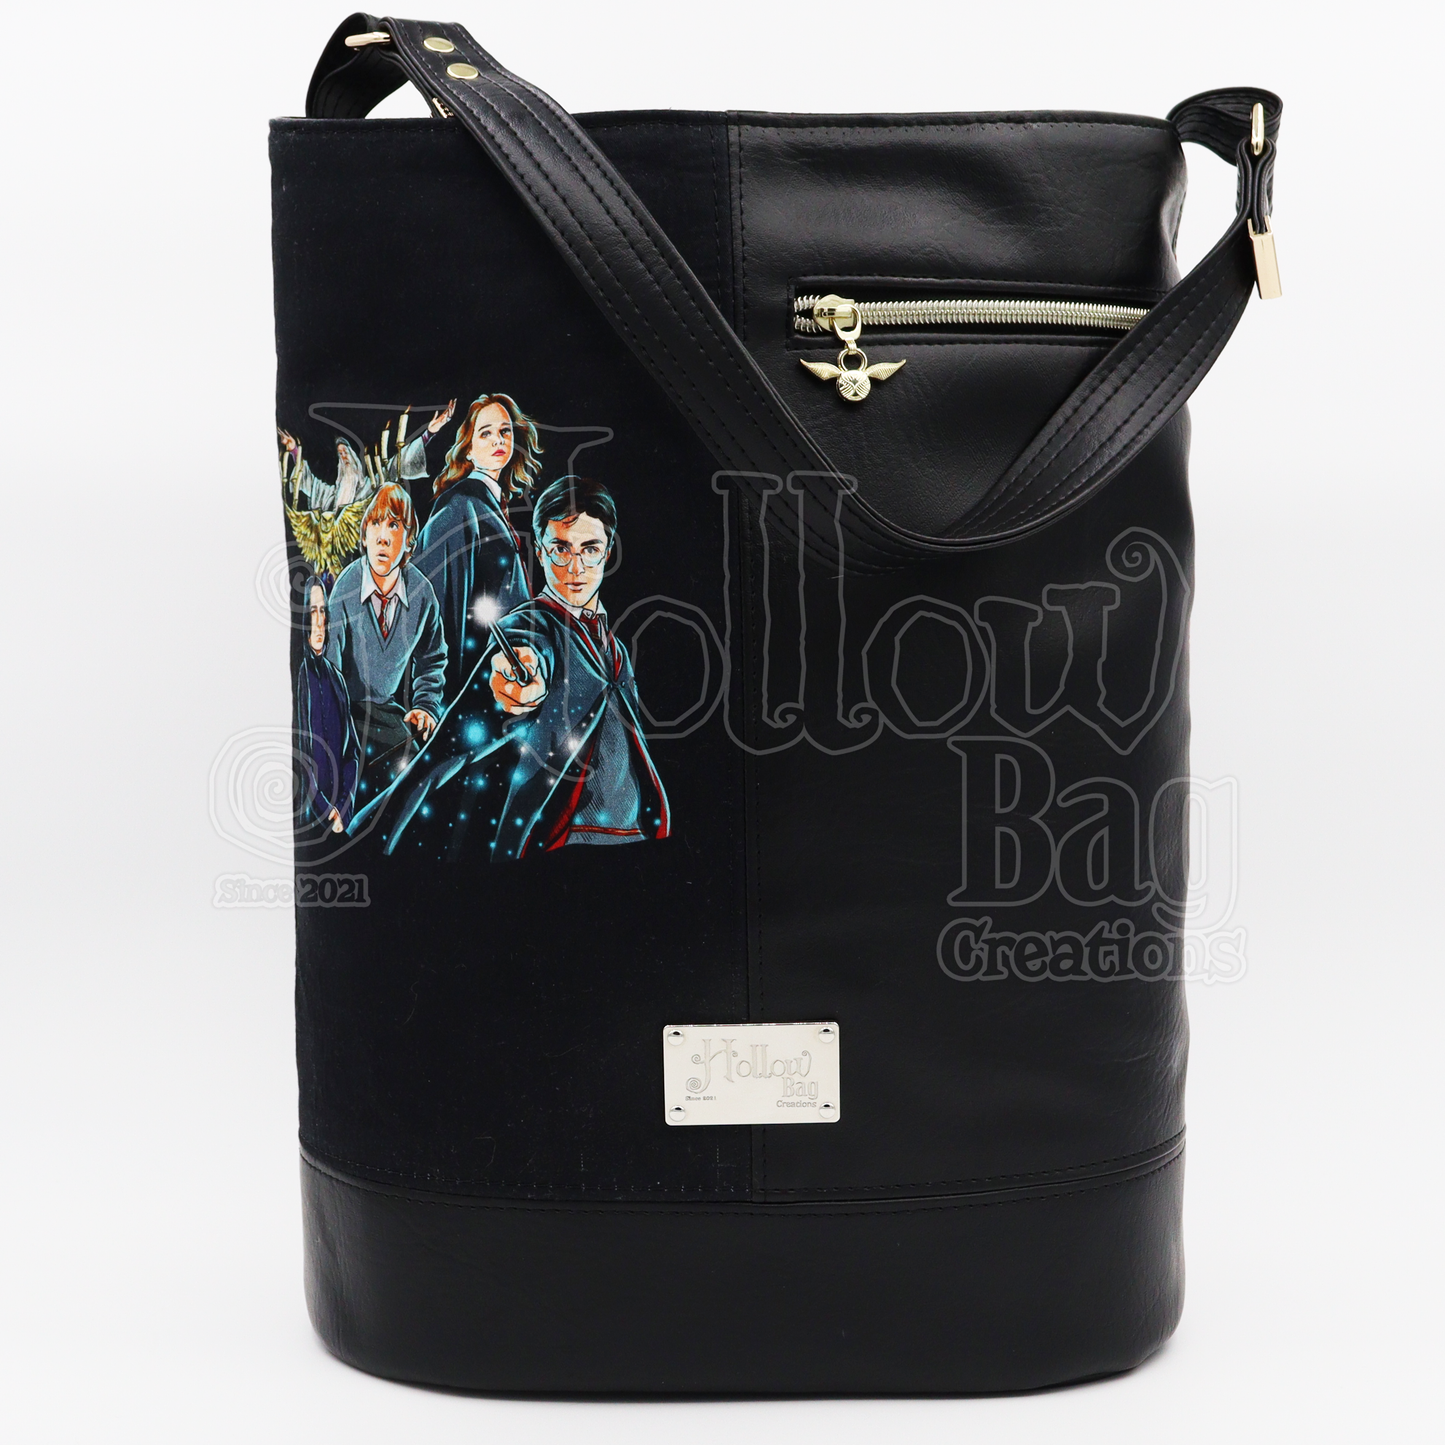 Magic people - Bucket Bag